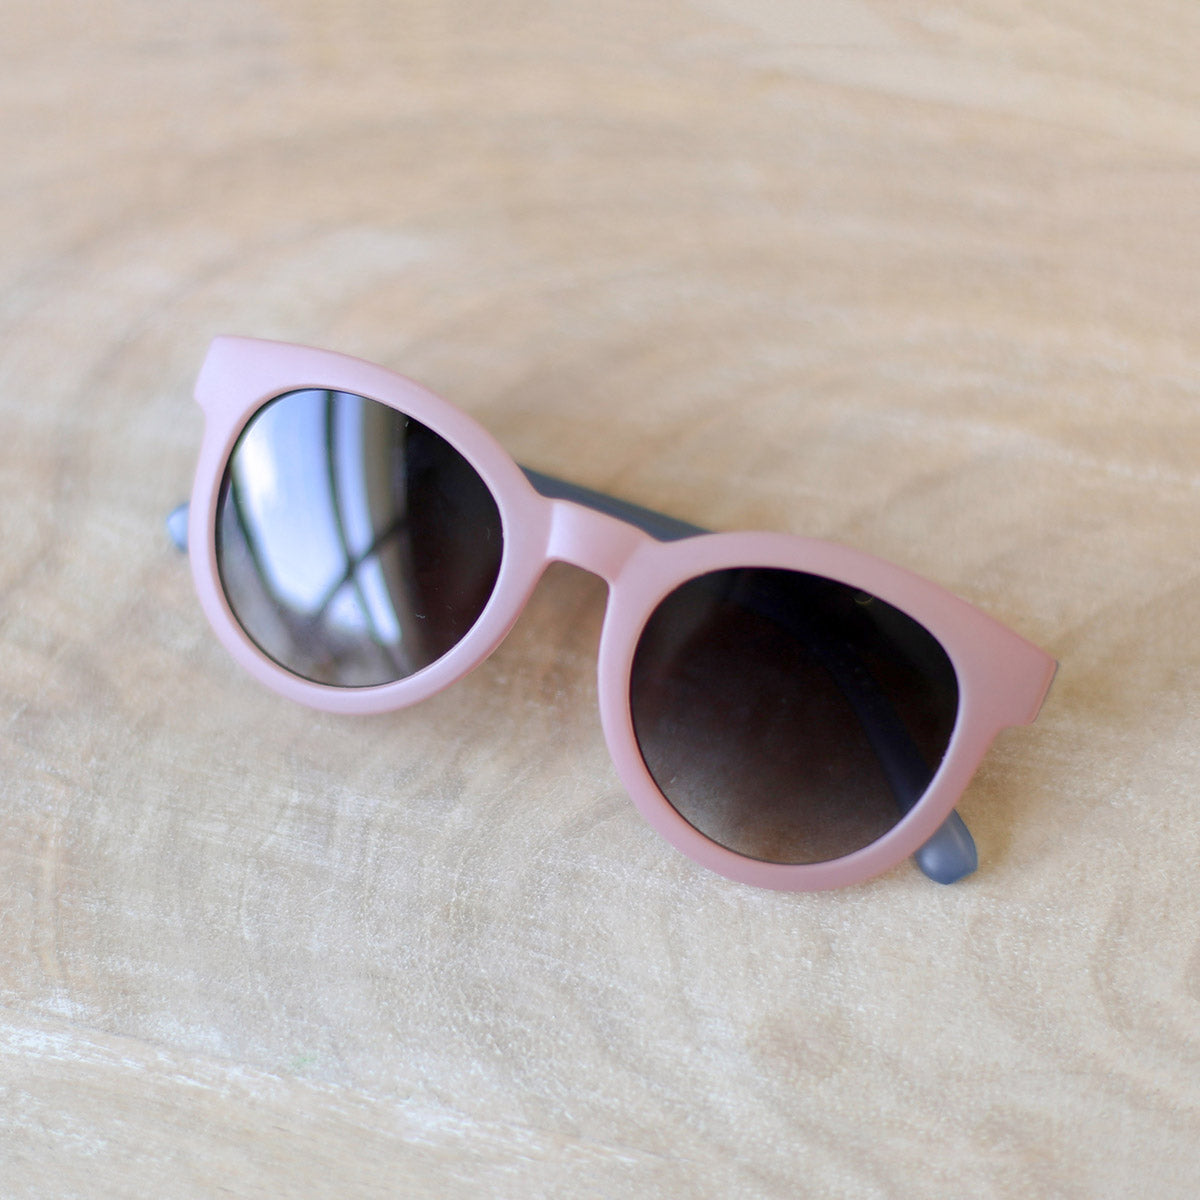 Kid’s Harbor Sunglasses - Pink/Grey